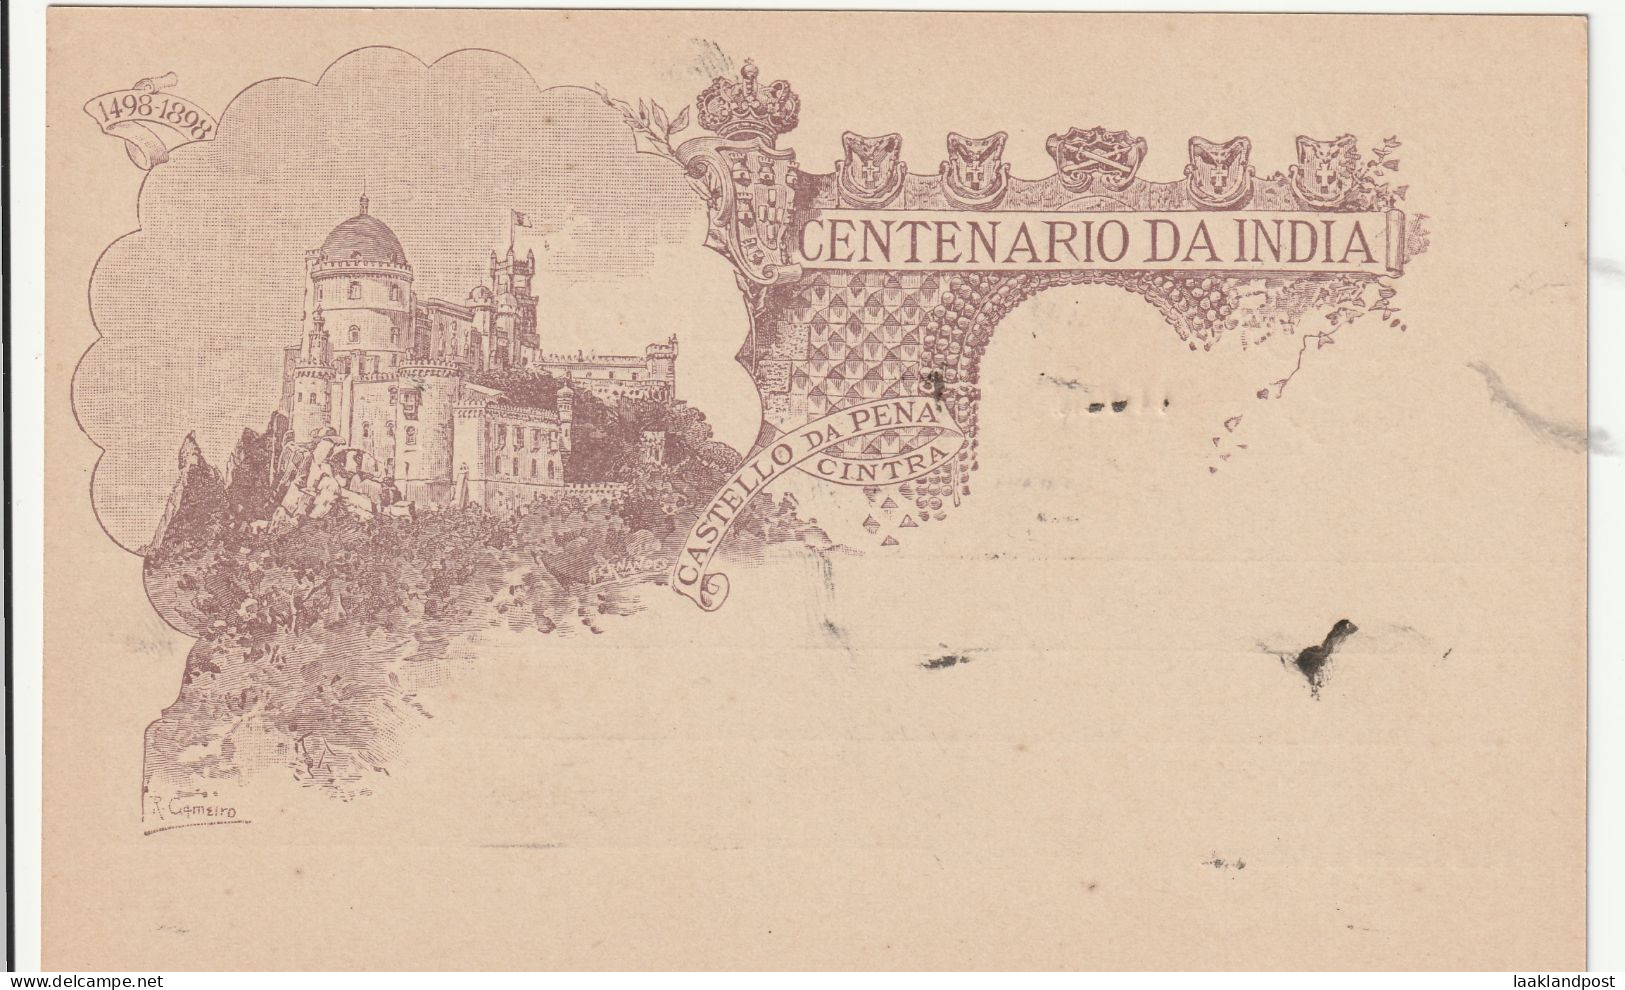 Portugiesisch Afrika 1898 Illustrated Postcard, 20 Reis, Vasco Da Gama, "Castello Da Pena Centra "unused - Portugiesisch-Afrika